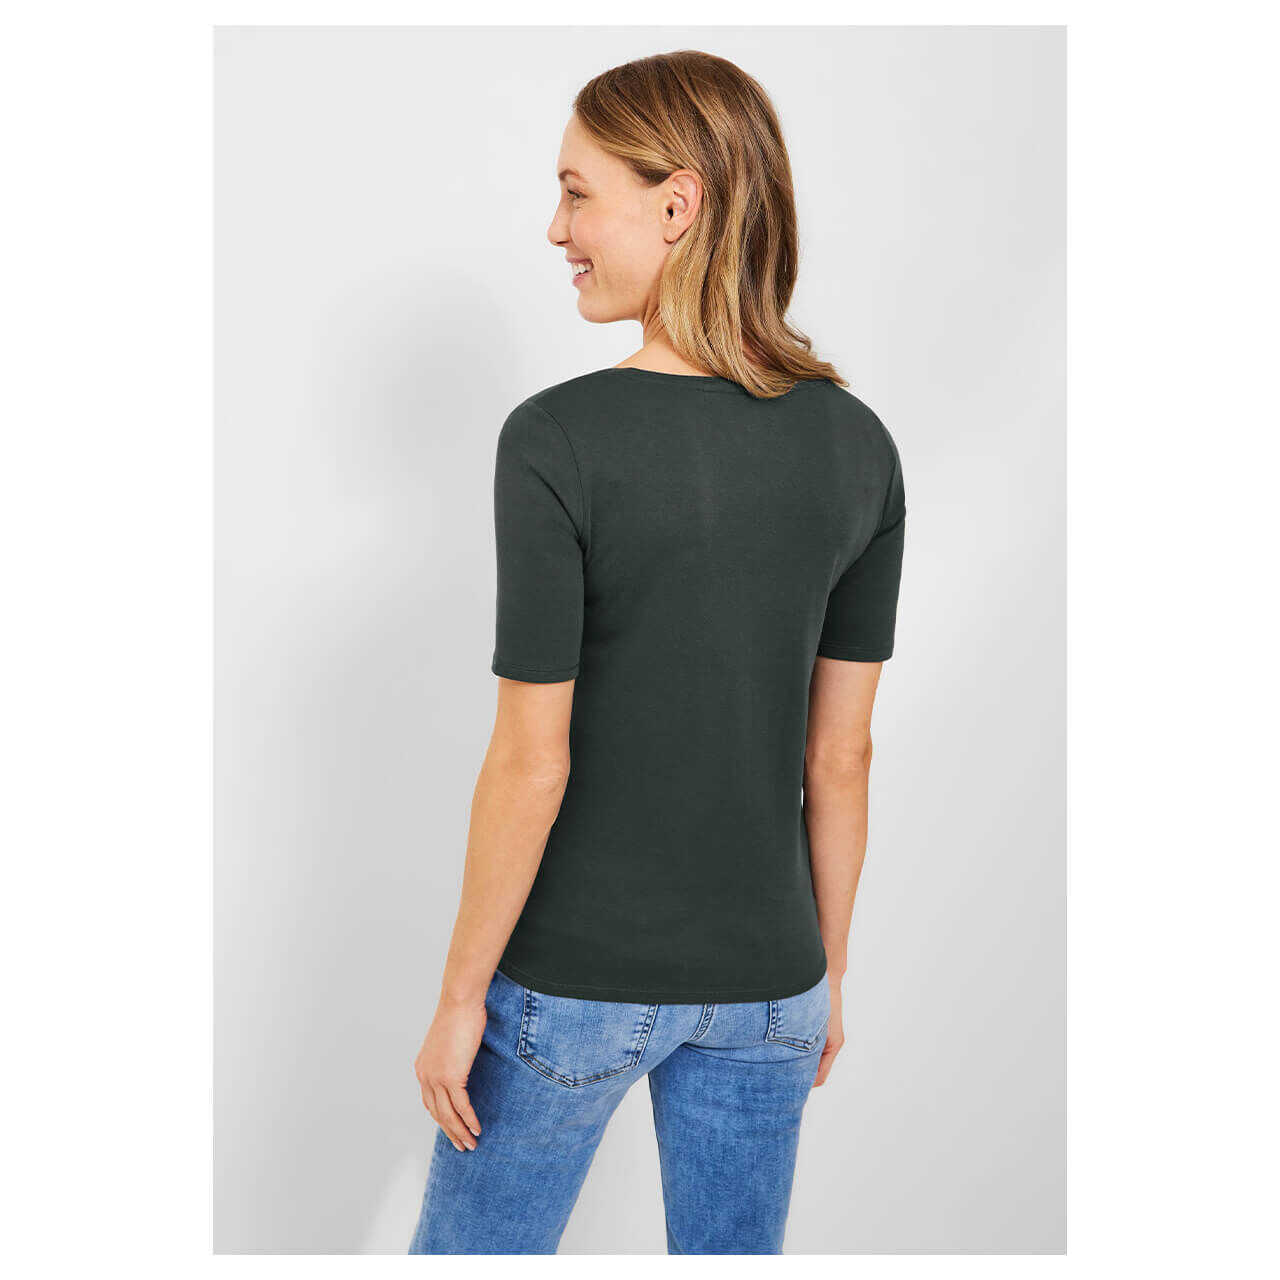 Cecil Lena T-Shirt easy khaki